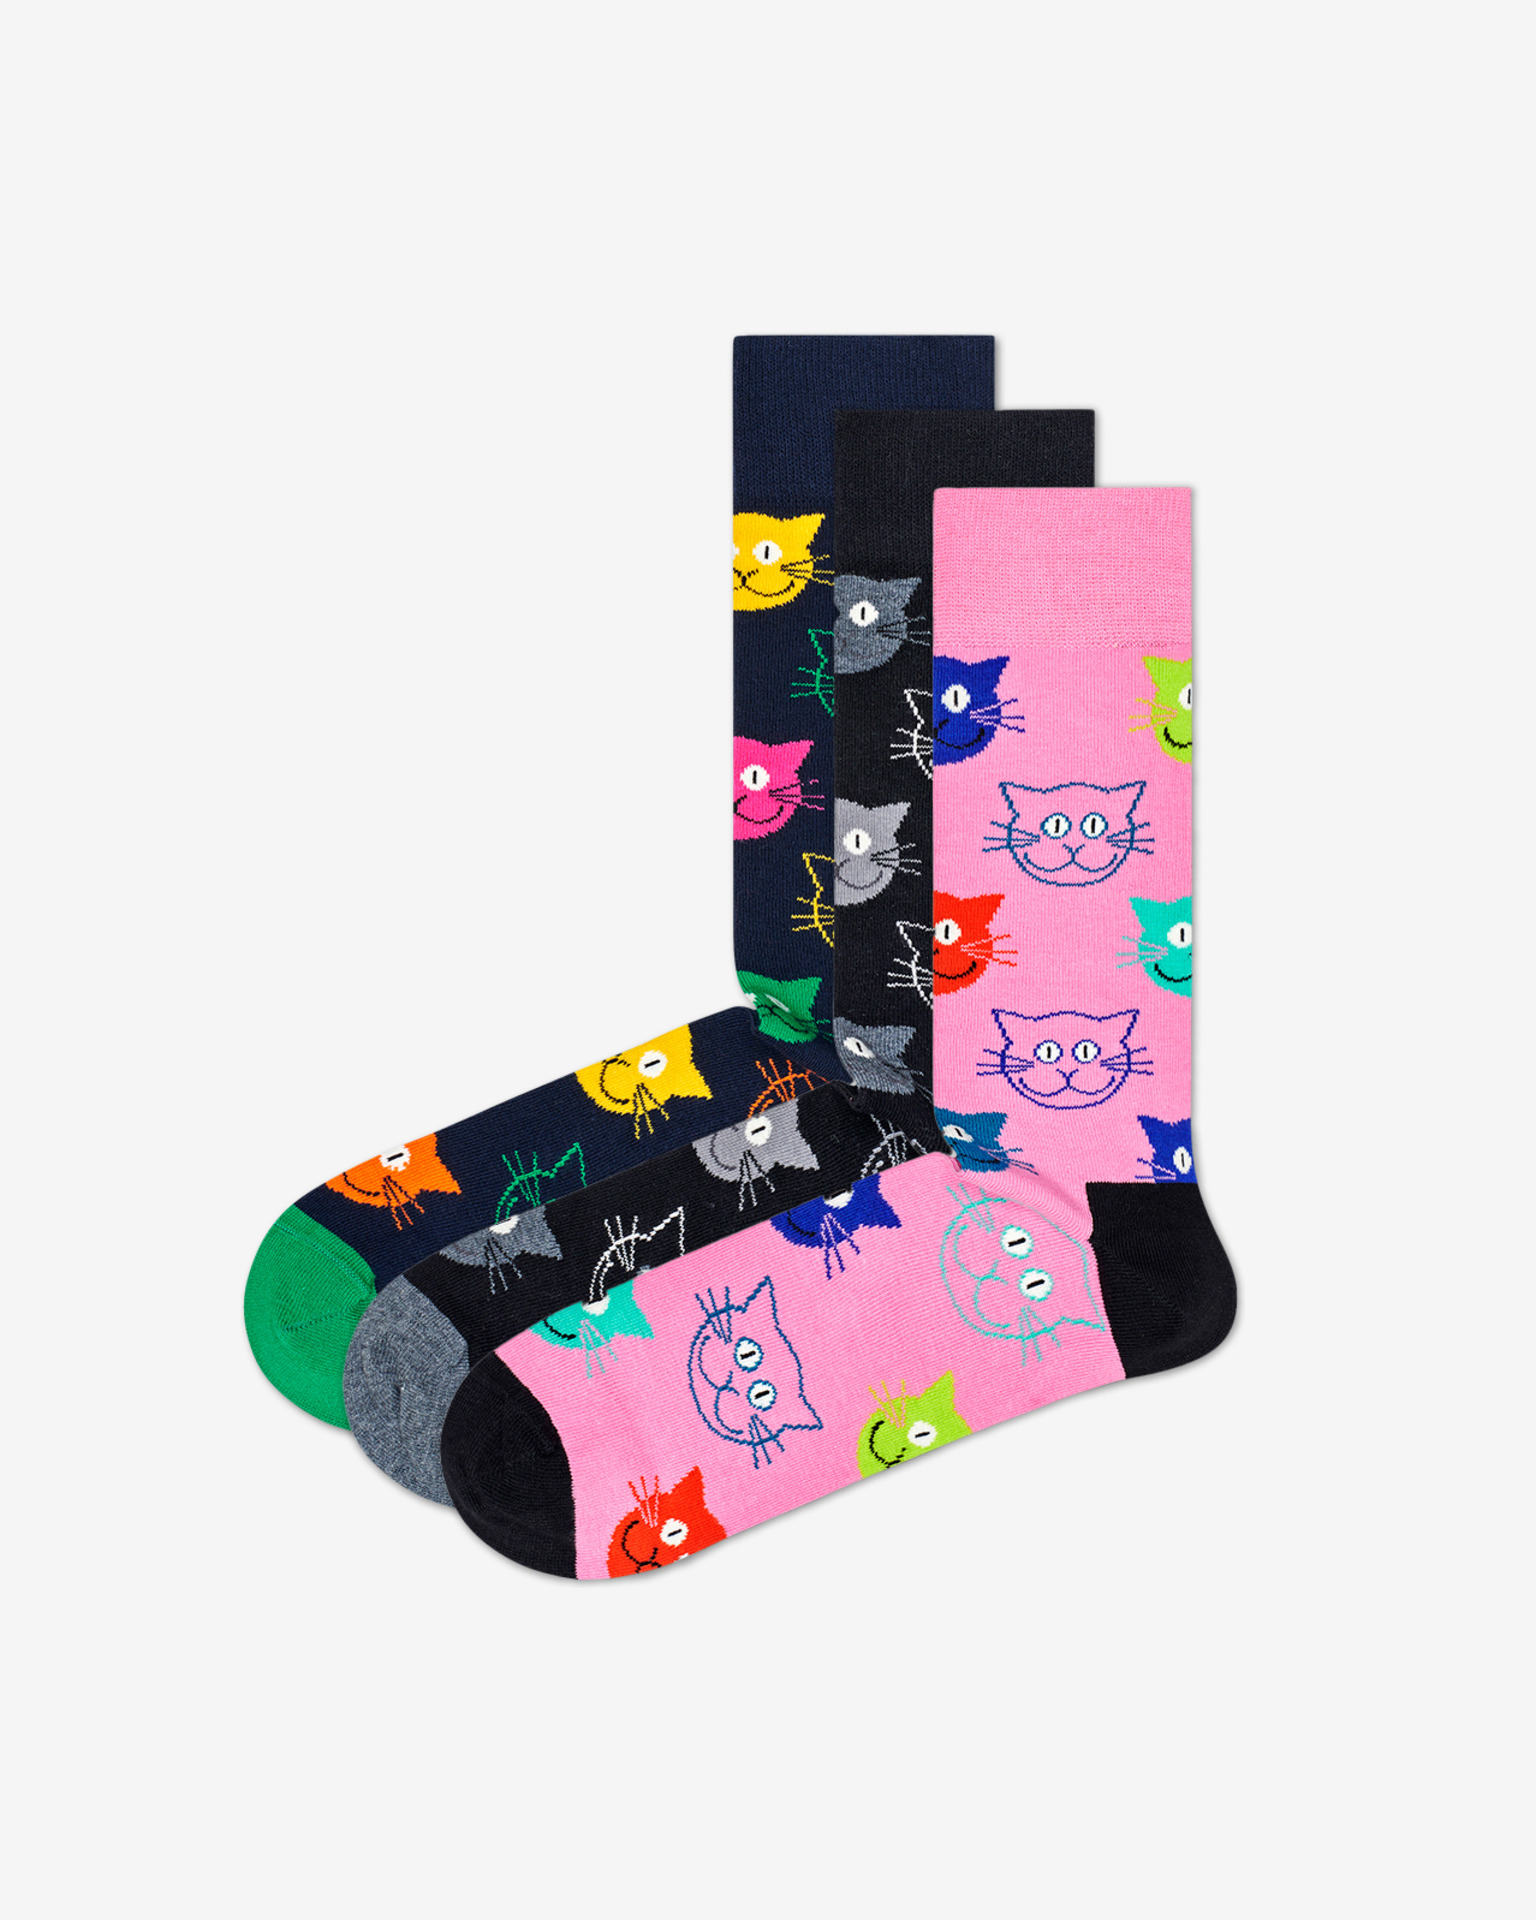 Happy Socks - Cat Gift Box Set of 3 pairs of socks